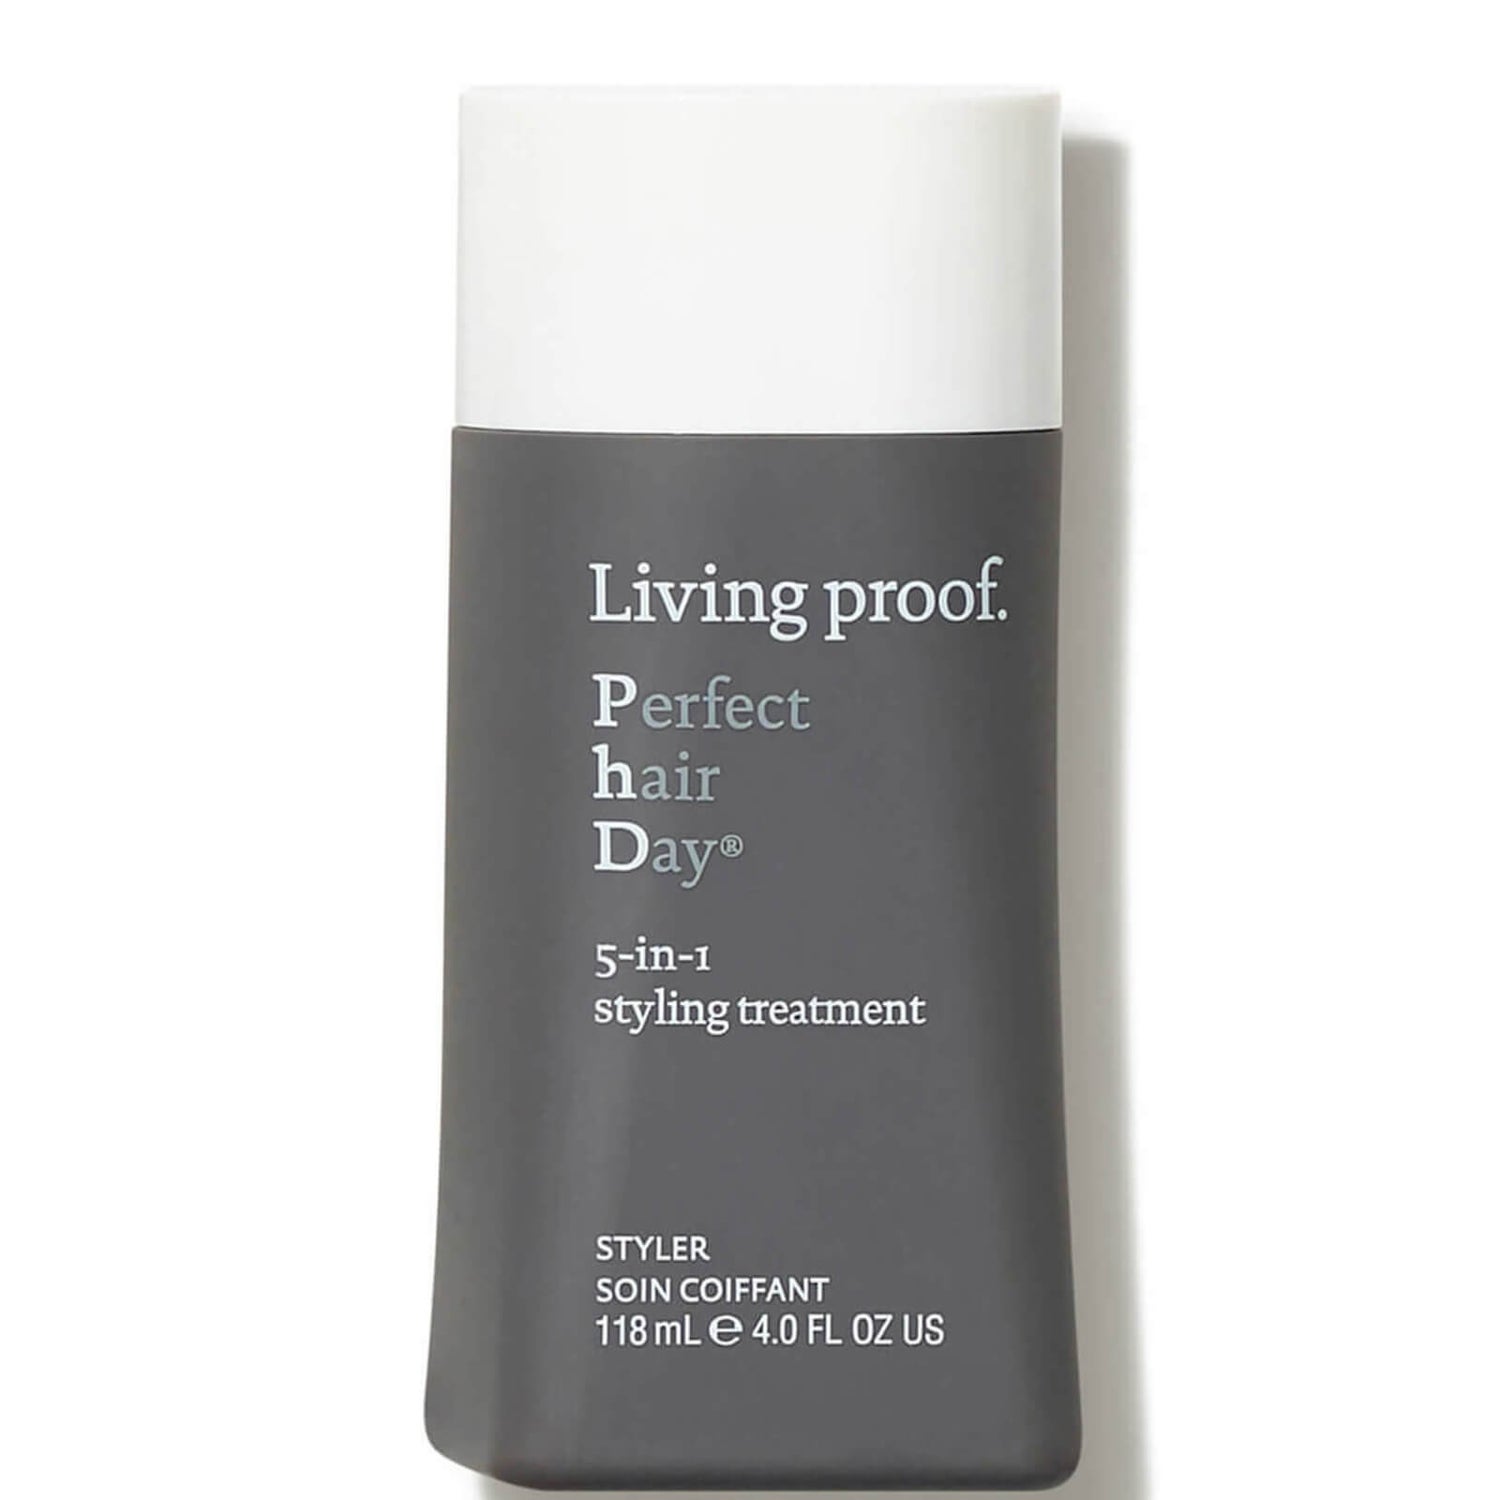 Living Proof Perfect Hair Day (PhD) 5-in-1 Styling Treatment kuracja stylizująca 118 ml